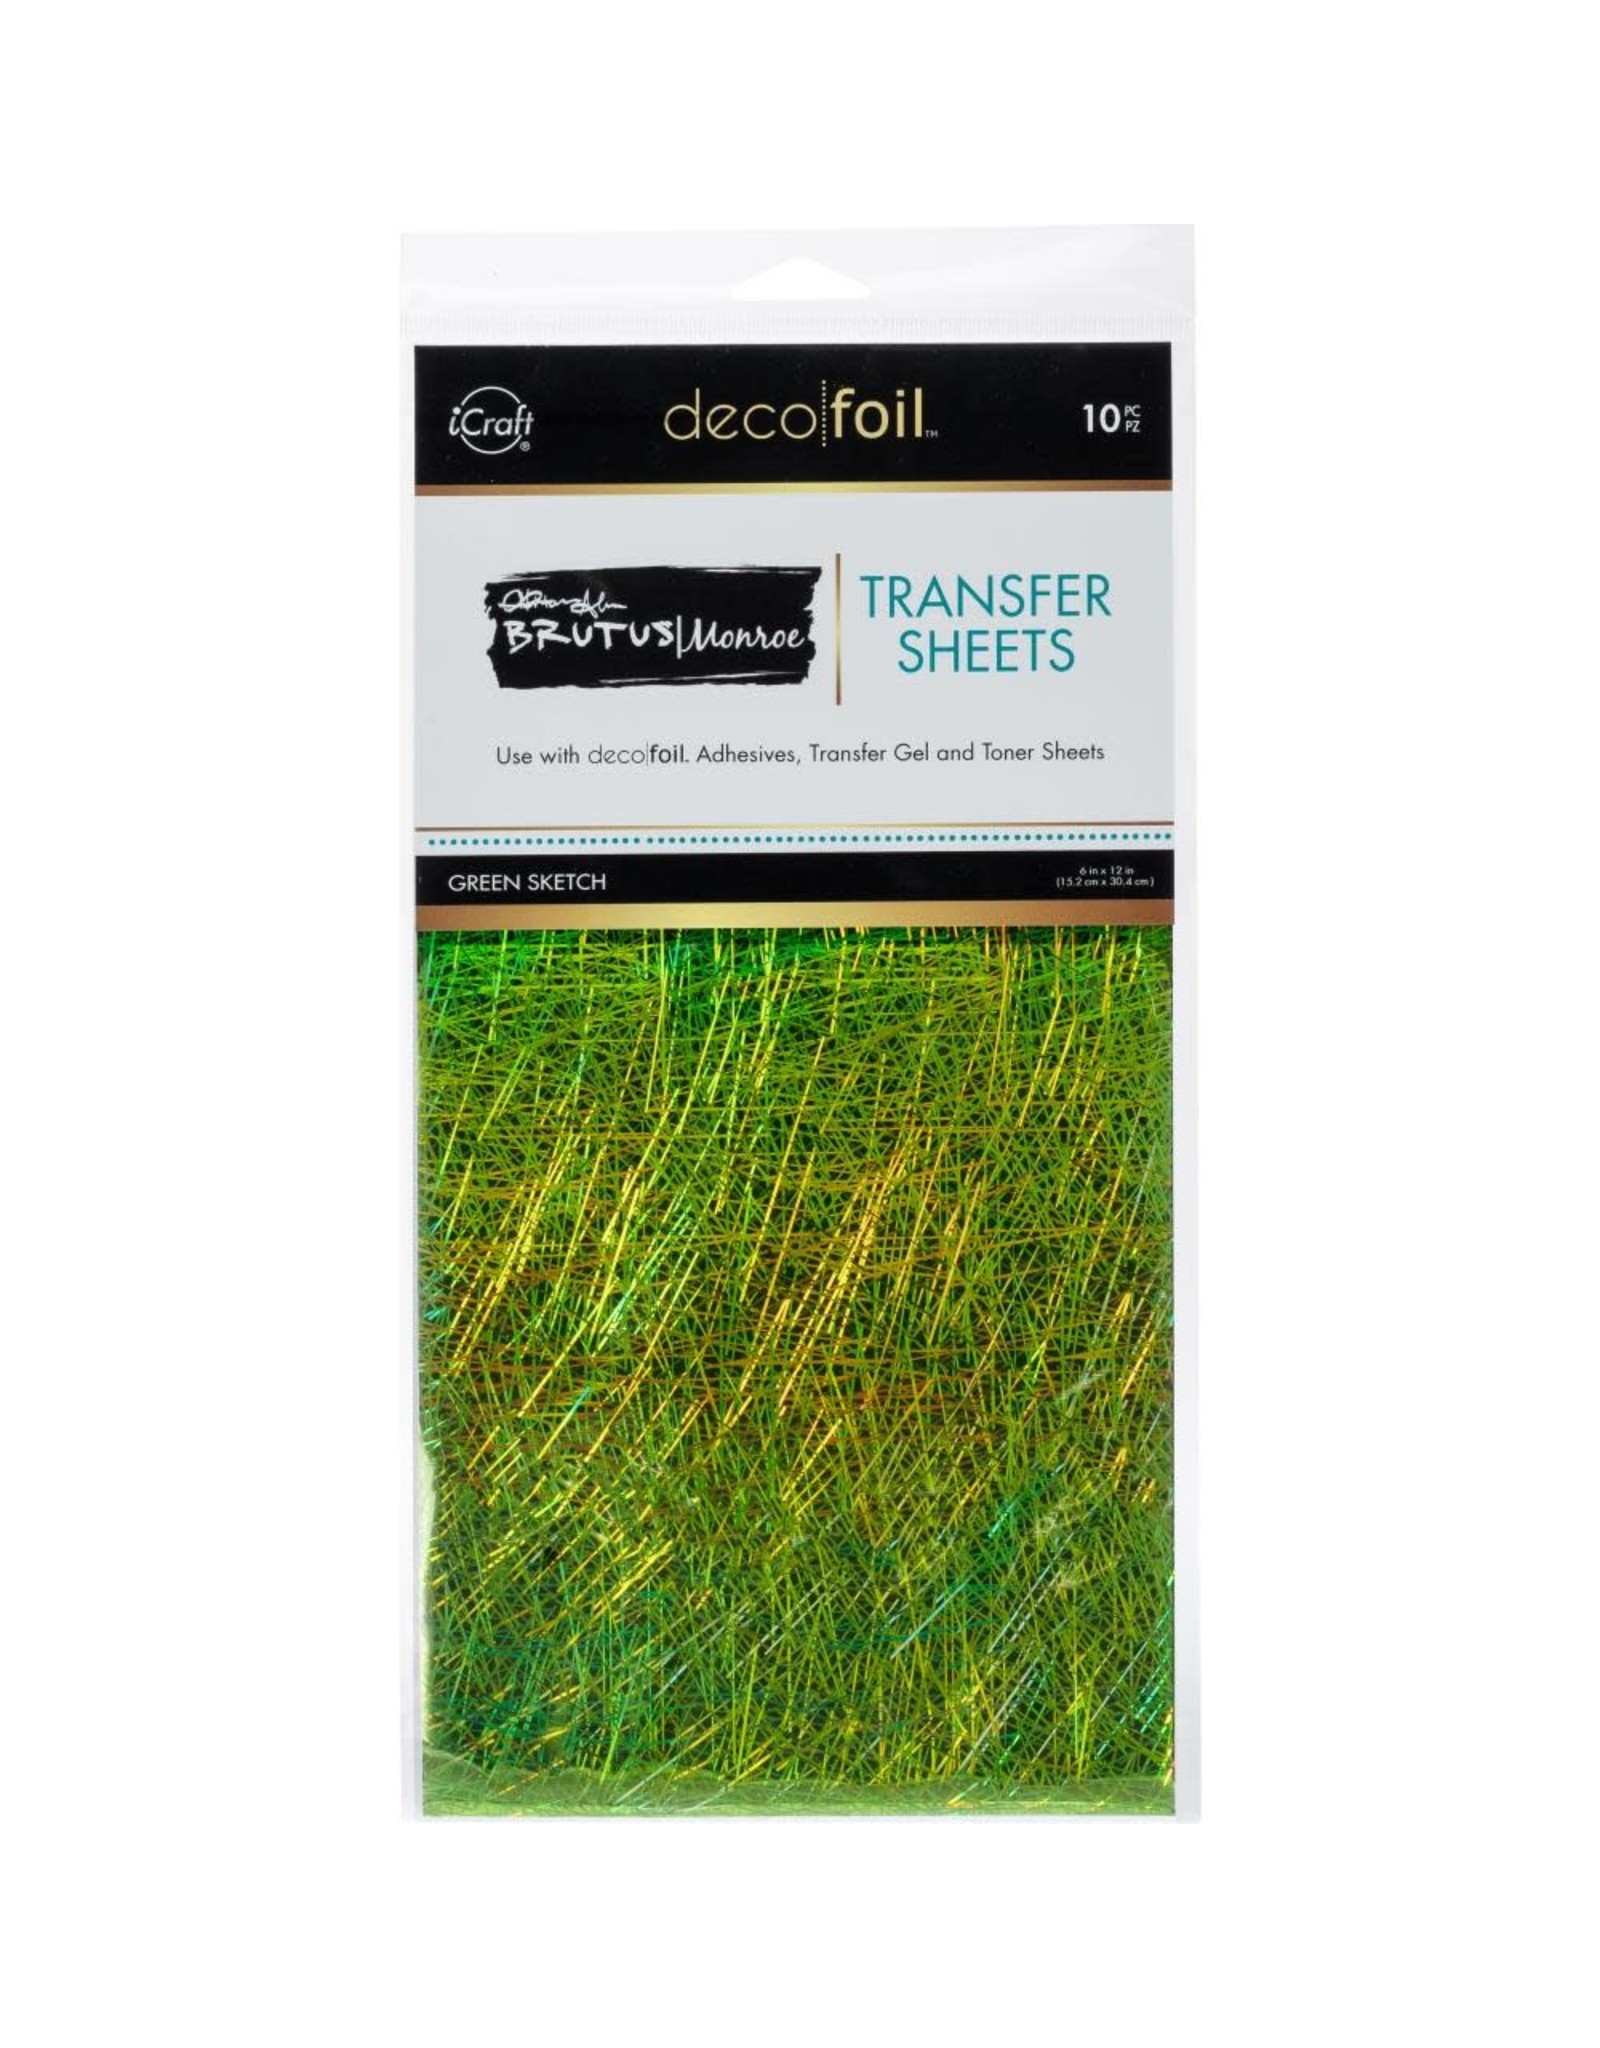 THERMOWEB ICRAFT BRUTUS MONROE DECO FOIL GREEN SKETCH TRANSFER SHEETS 6x12 10 SHEETS